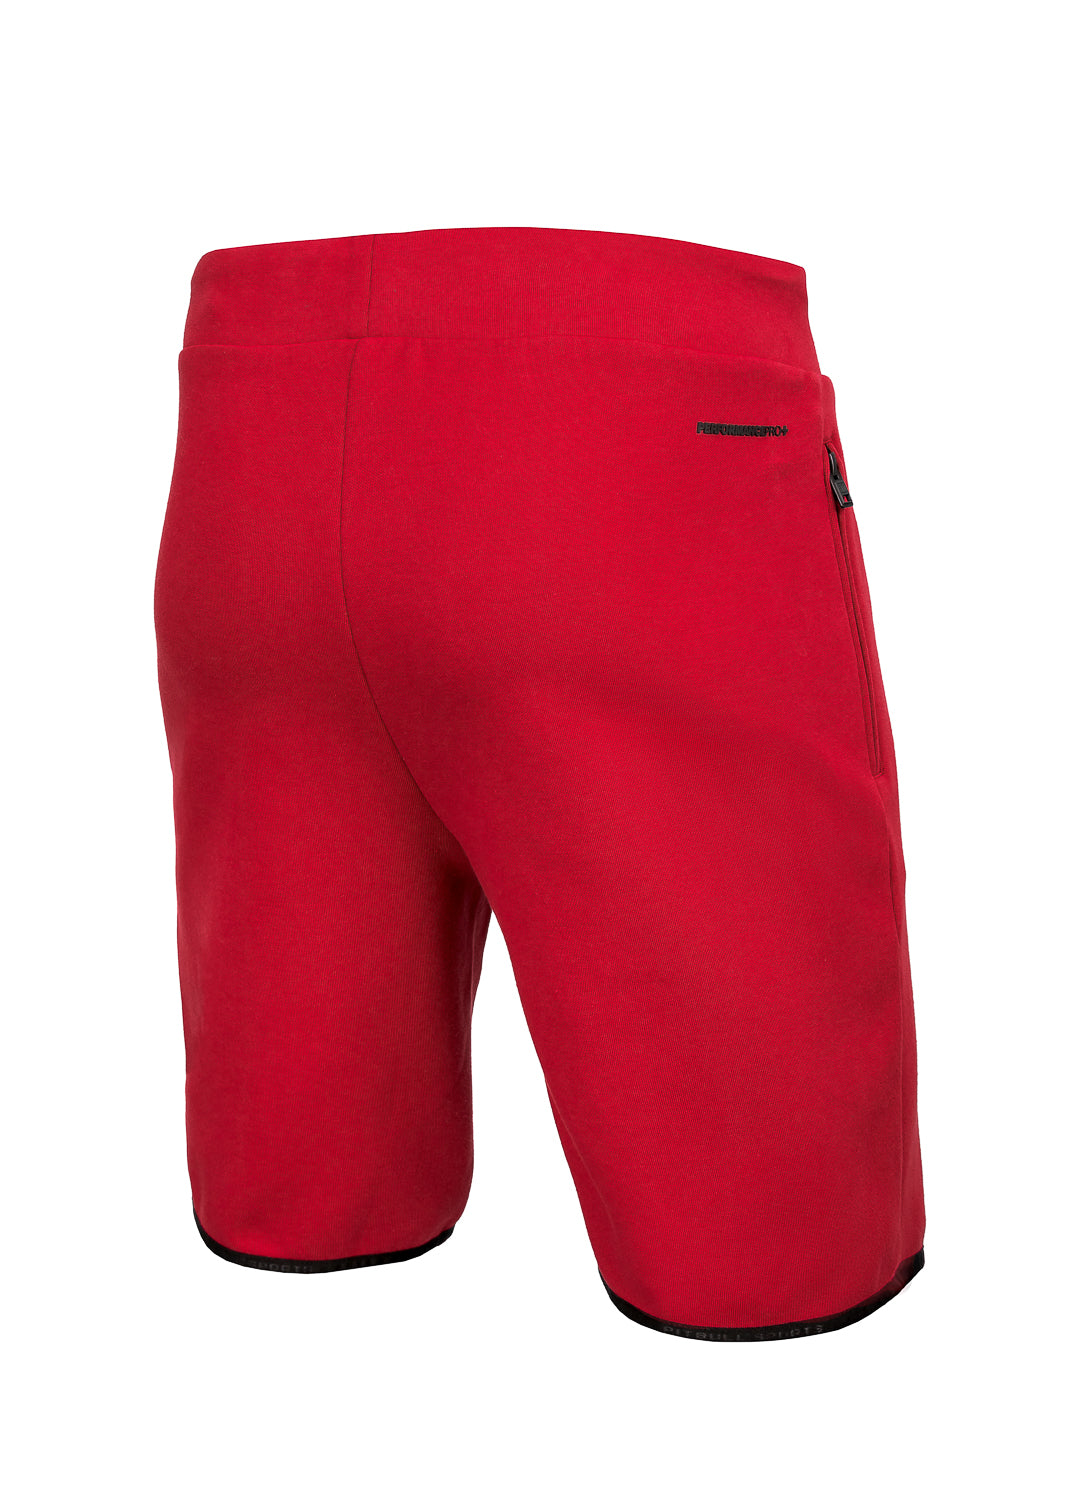 Shorts PHOENIX Red - Pitbull West Coast International Store 